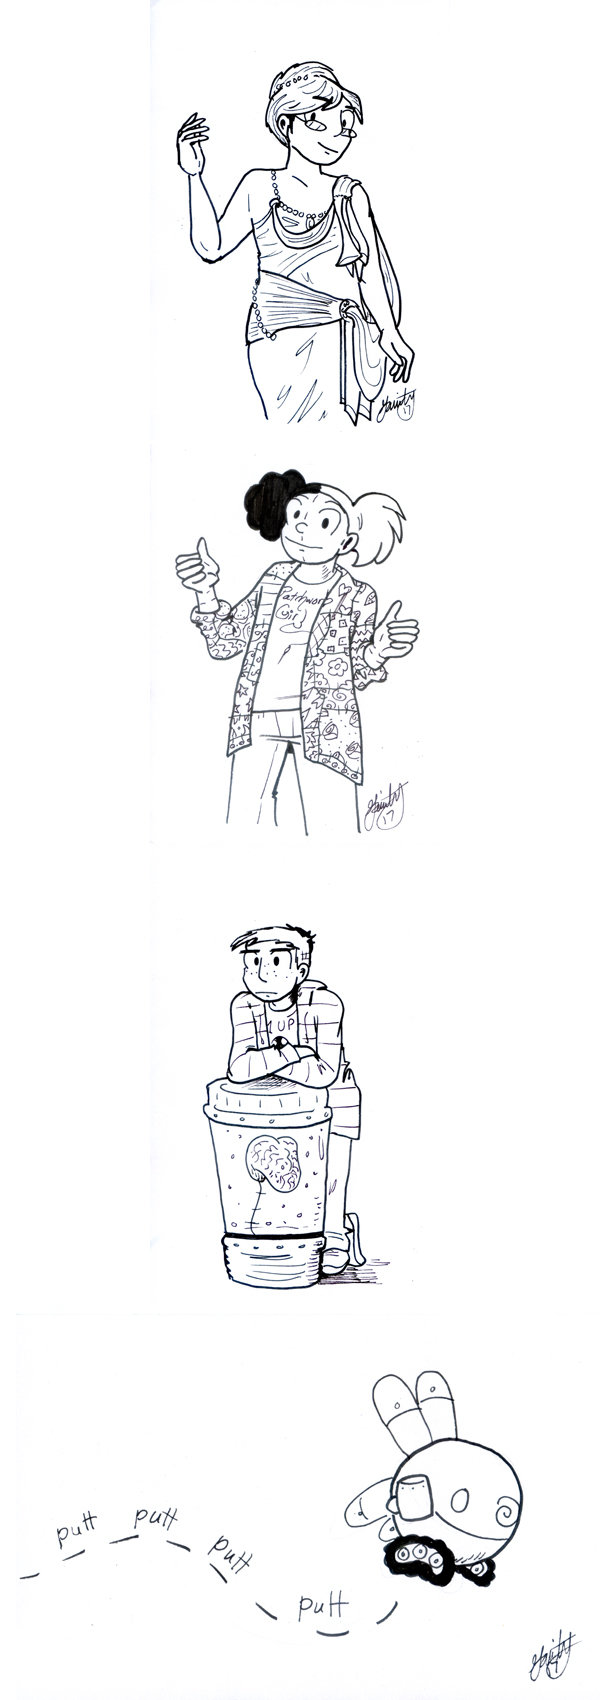 A Few More Kickstarter Sketches